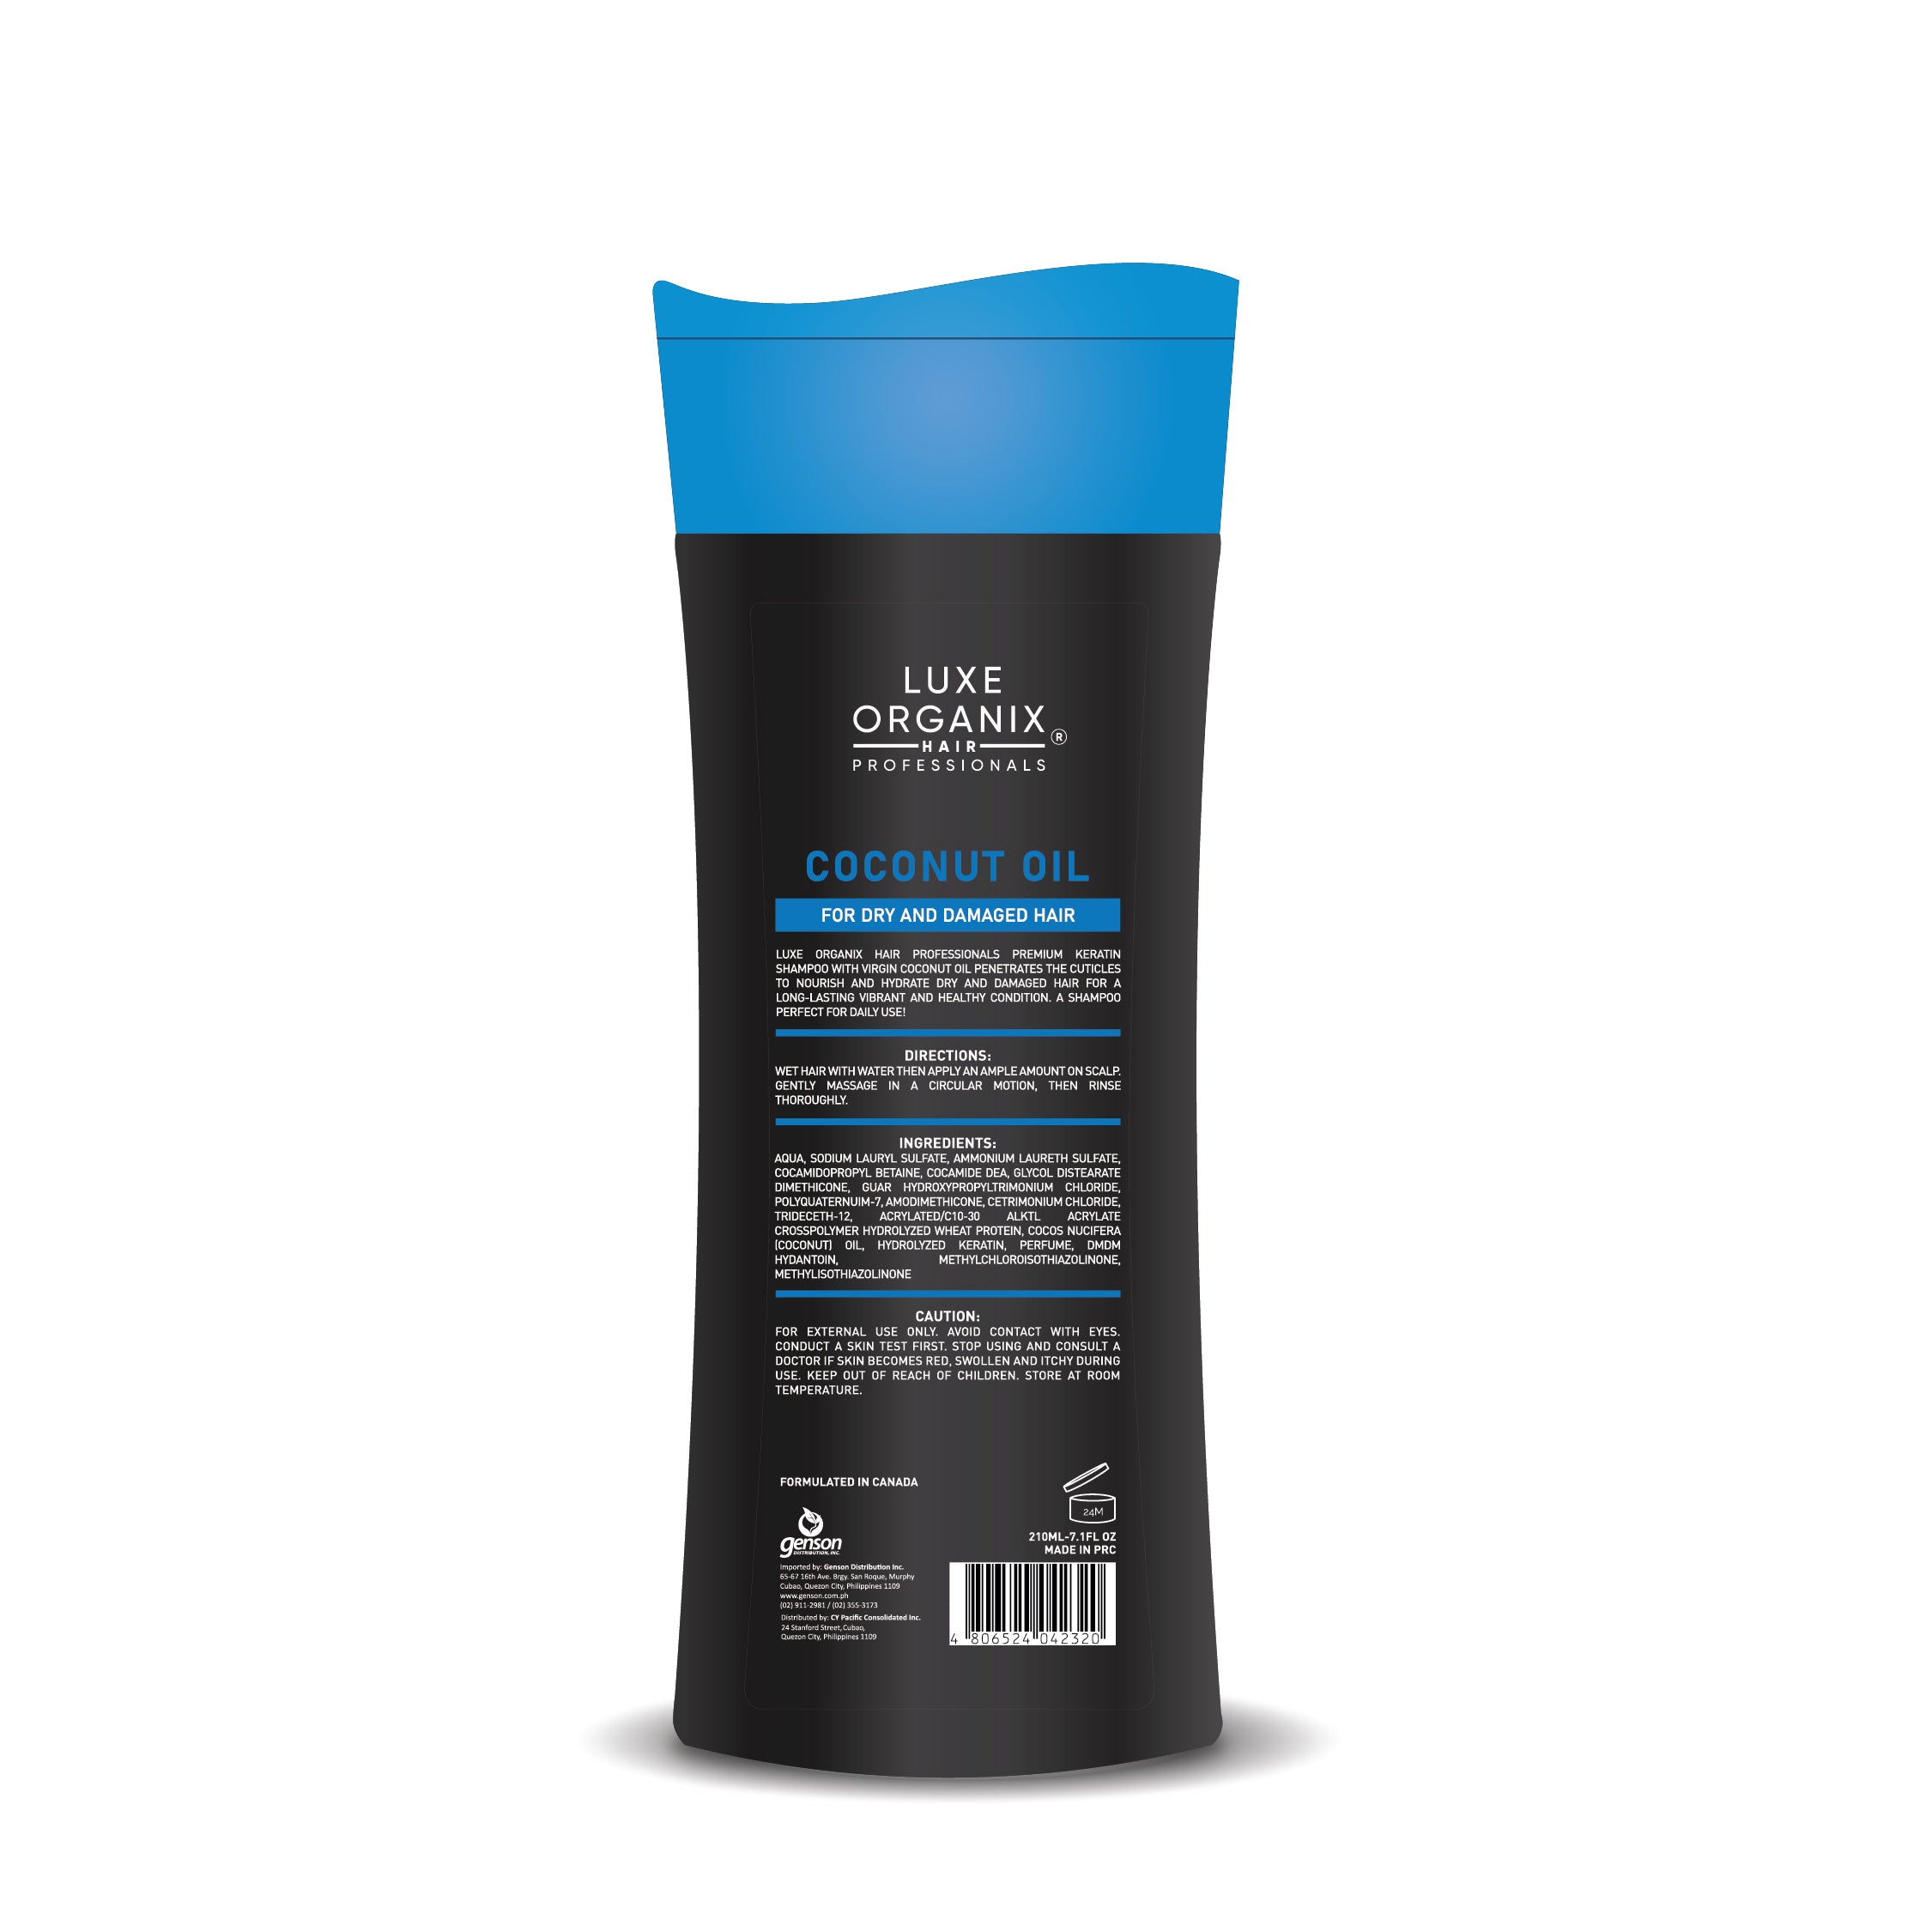 Premium Keratin Shampoo 210ml (VCO, Castor Oil, Argan Oil, Milk Protein)